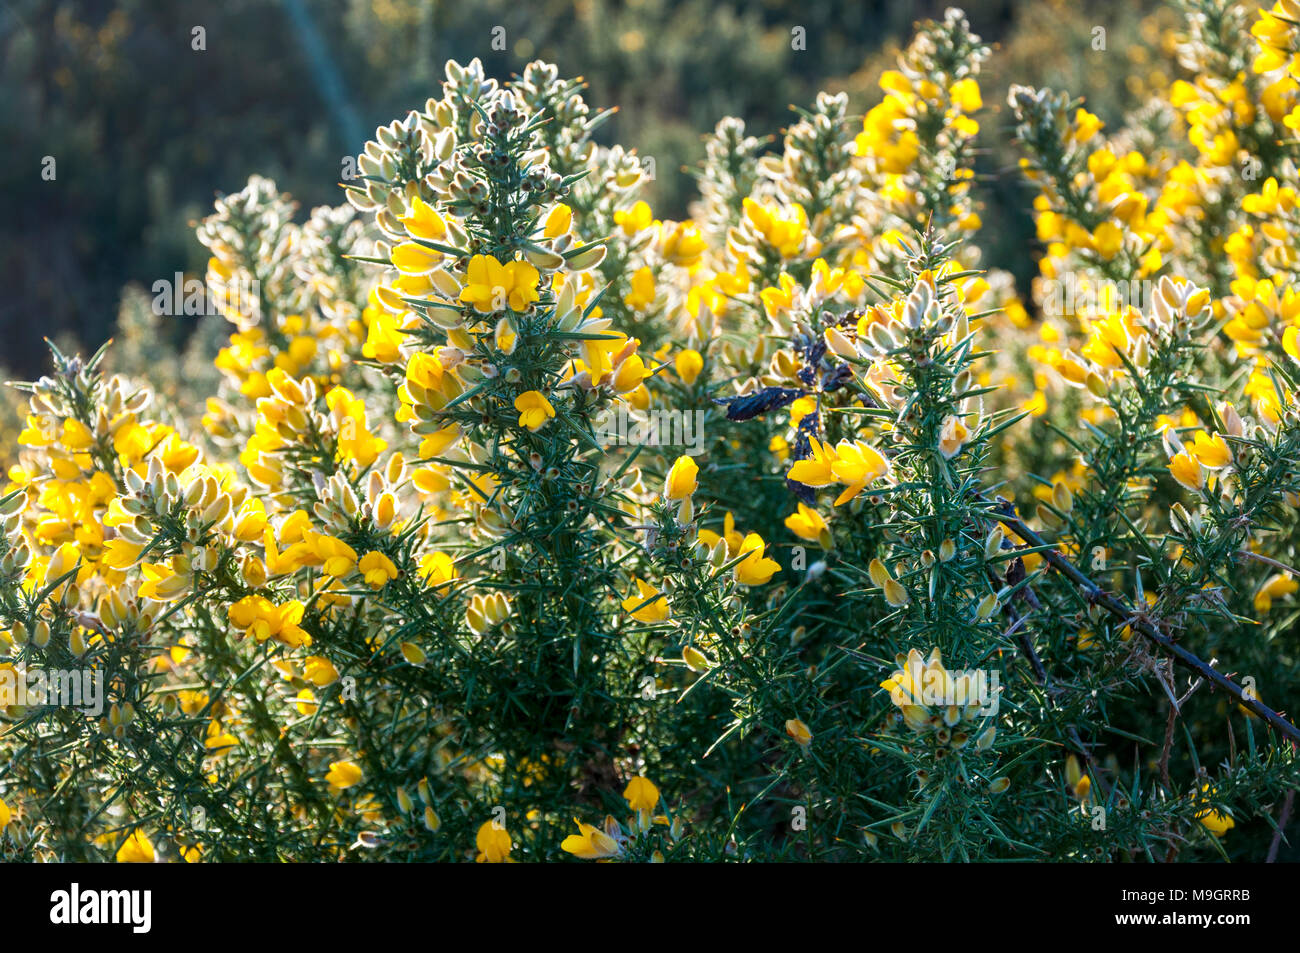 Gorse with bright yellow flowers and hard, sharp thorns. Ulex europaeus Aiteann gallda Fabaceae Stock Photo